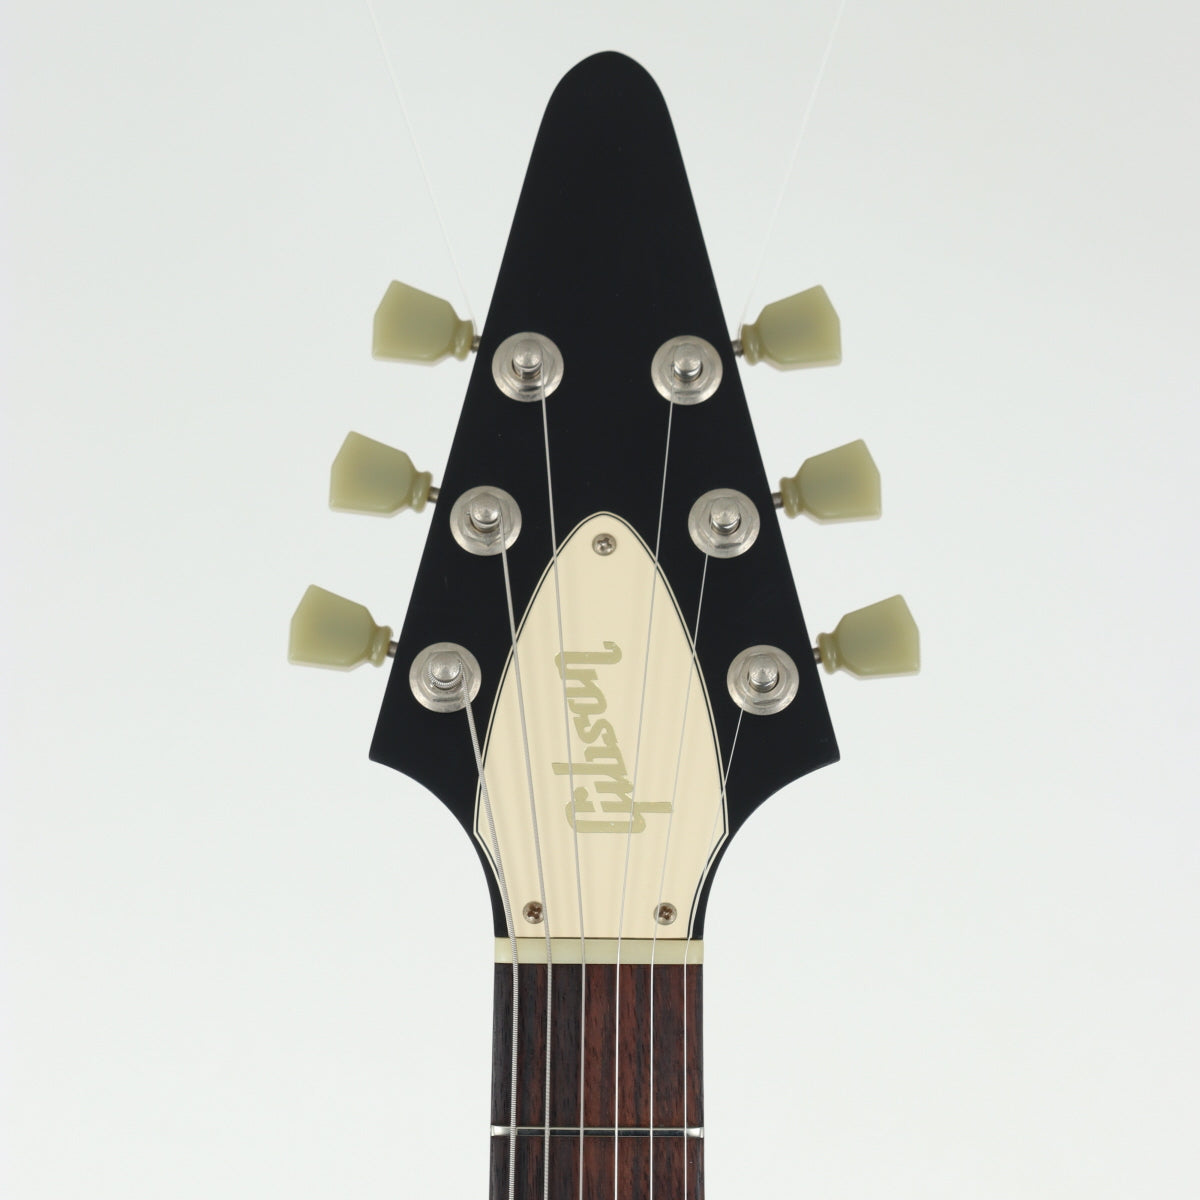 [SN 005780593] USED Gibson USA Gibson / Flying V Faded 3 Pickups Worn Ebony [20]